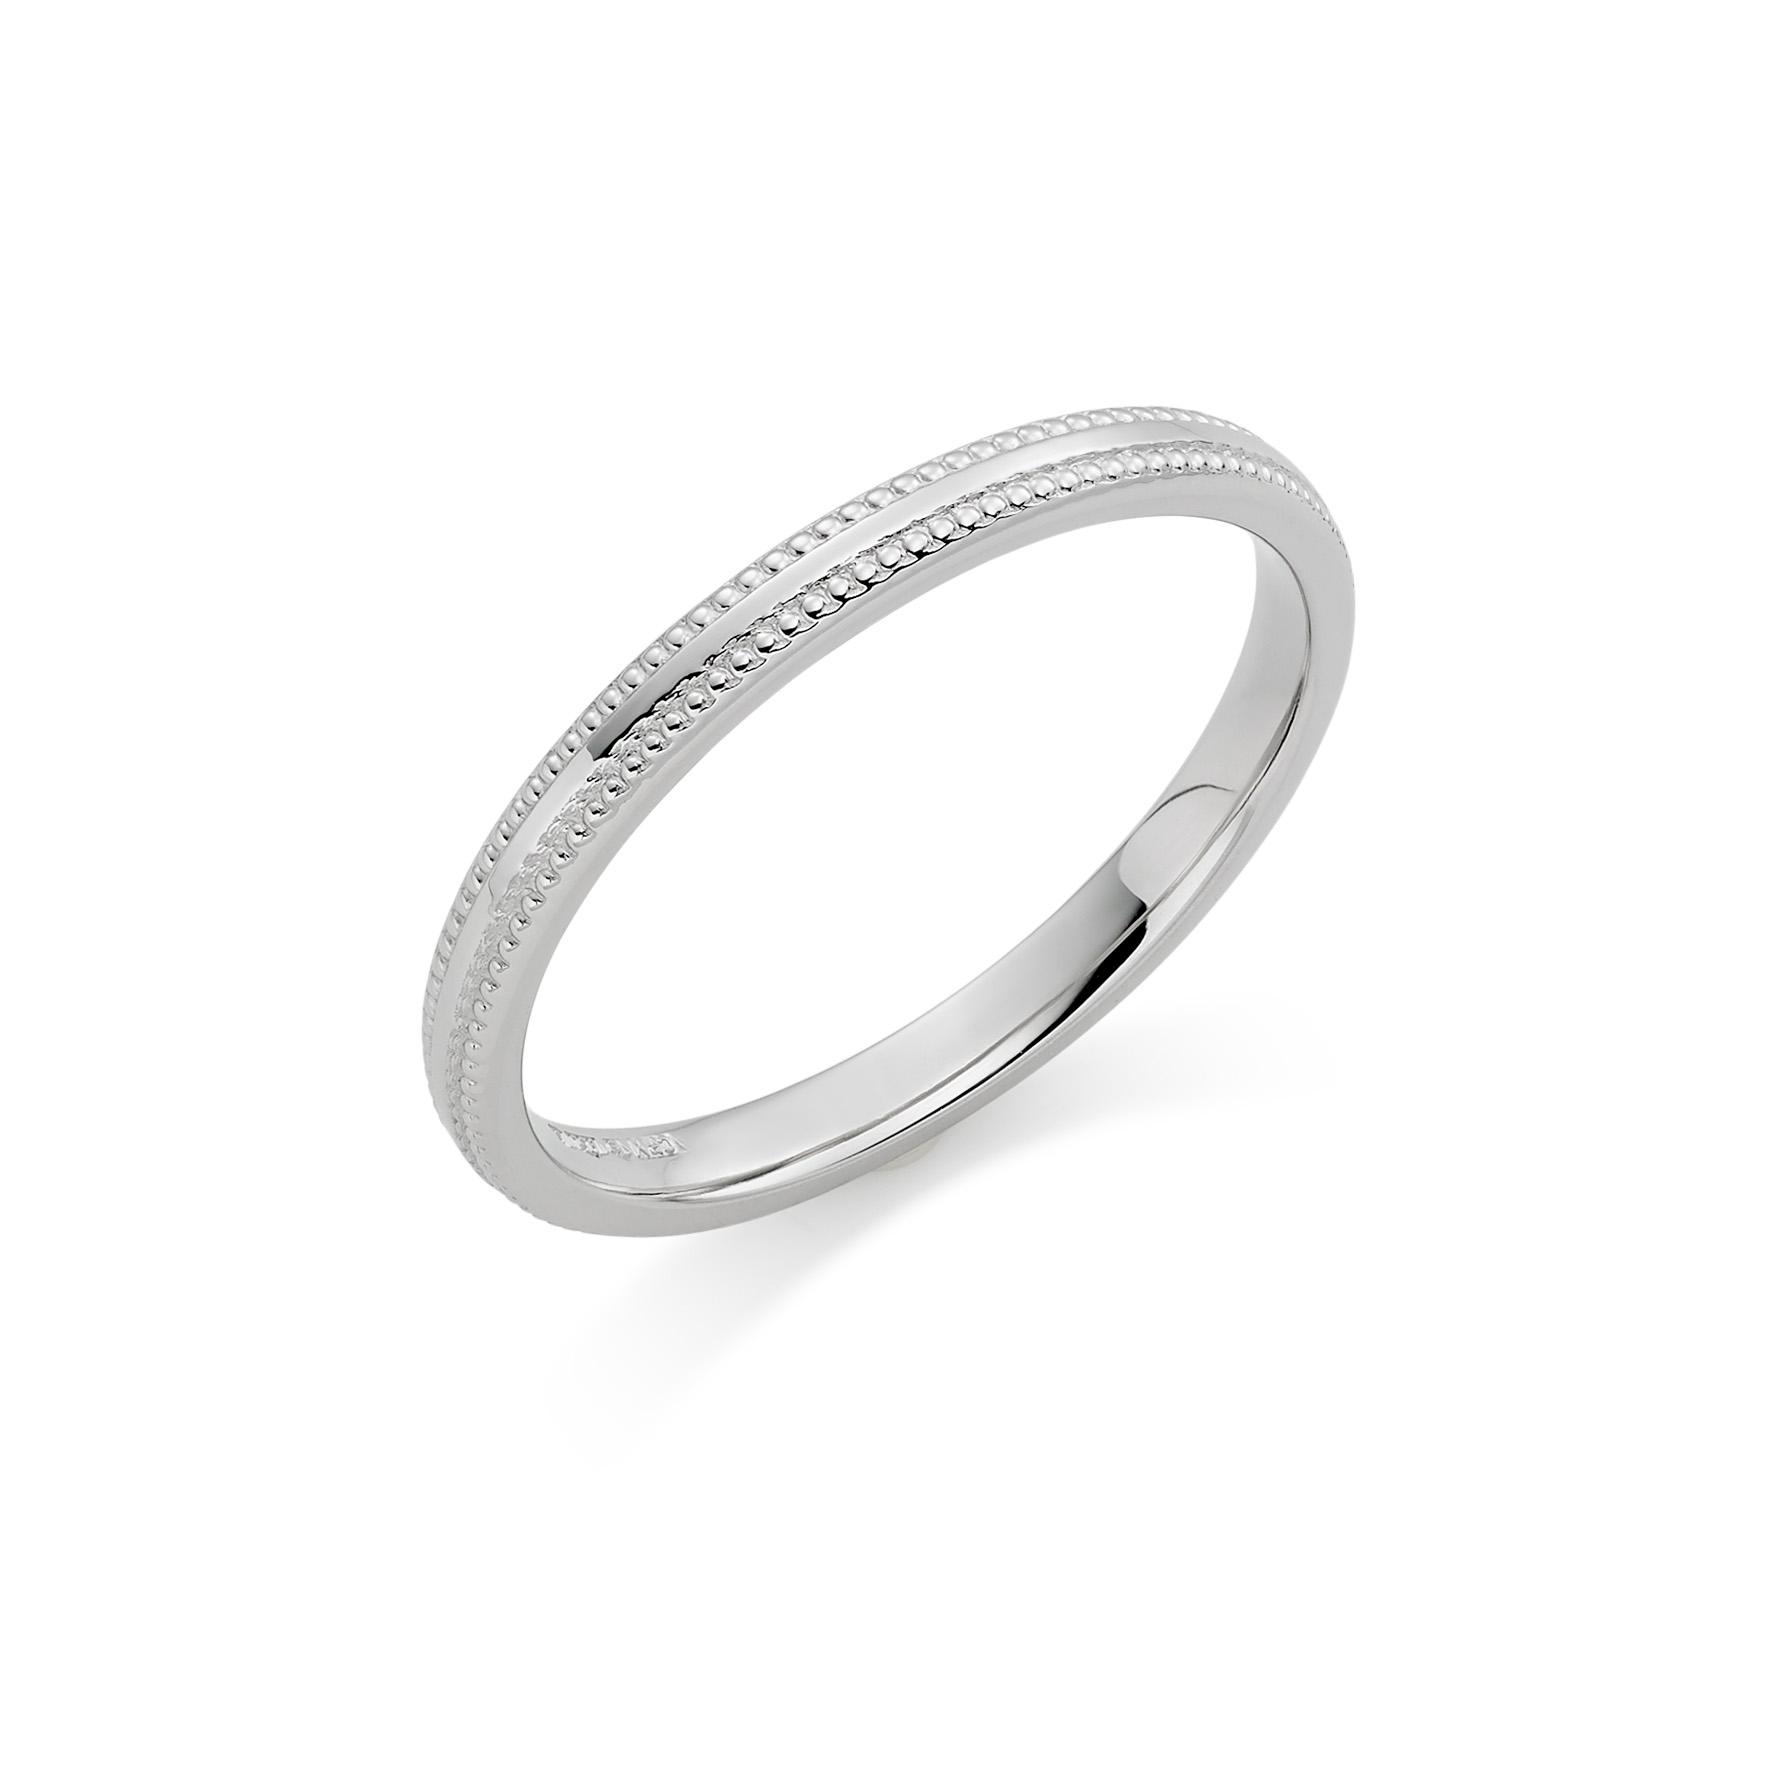 Hatton Garden Jewellers: Choosing Your Wedding Rings At Rennie & Co